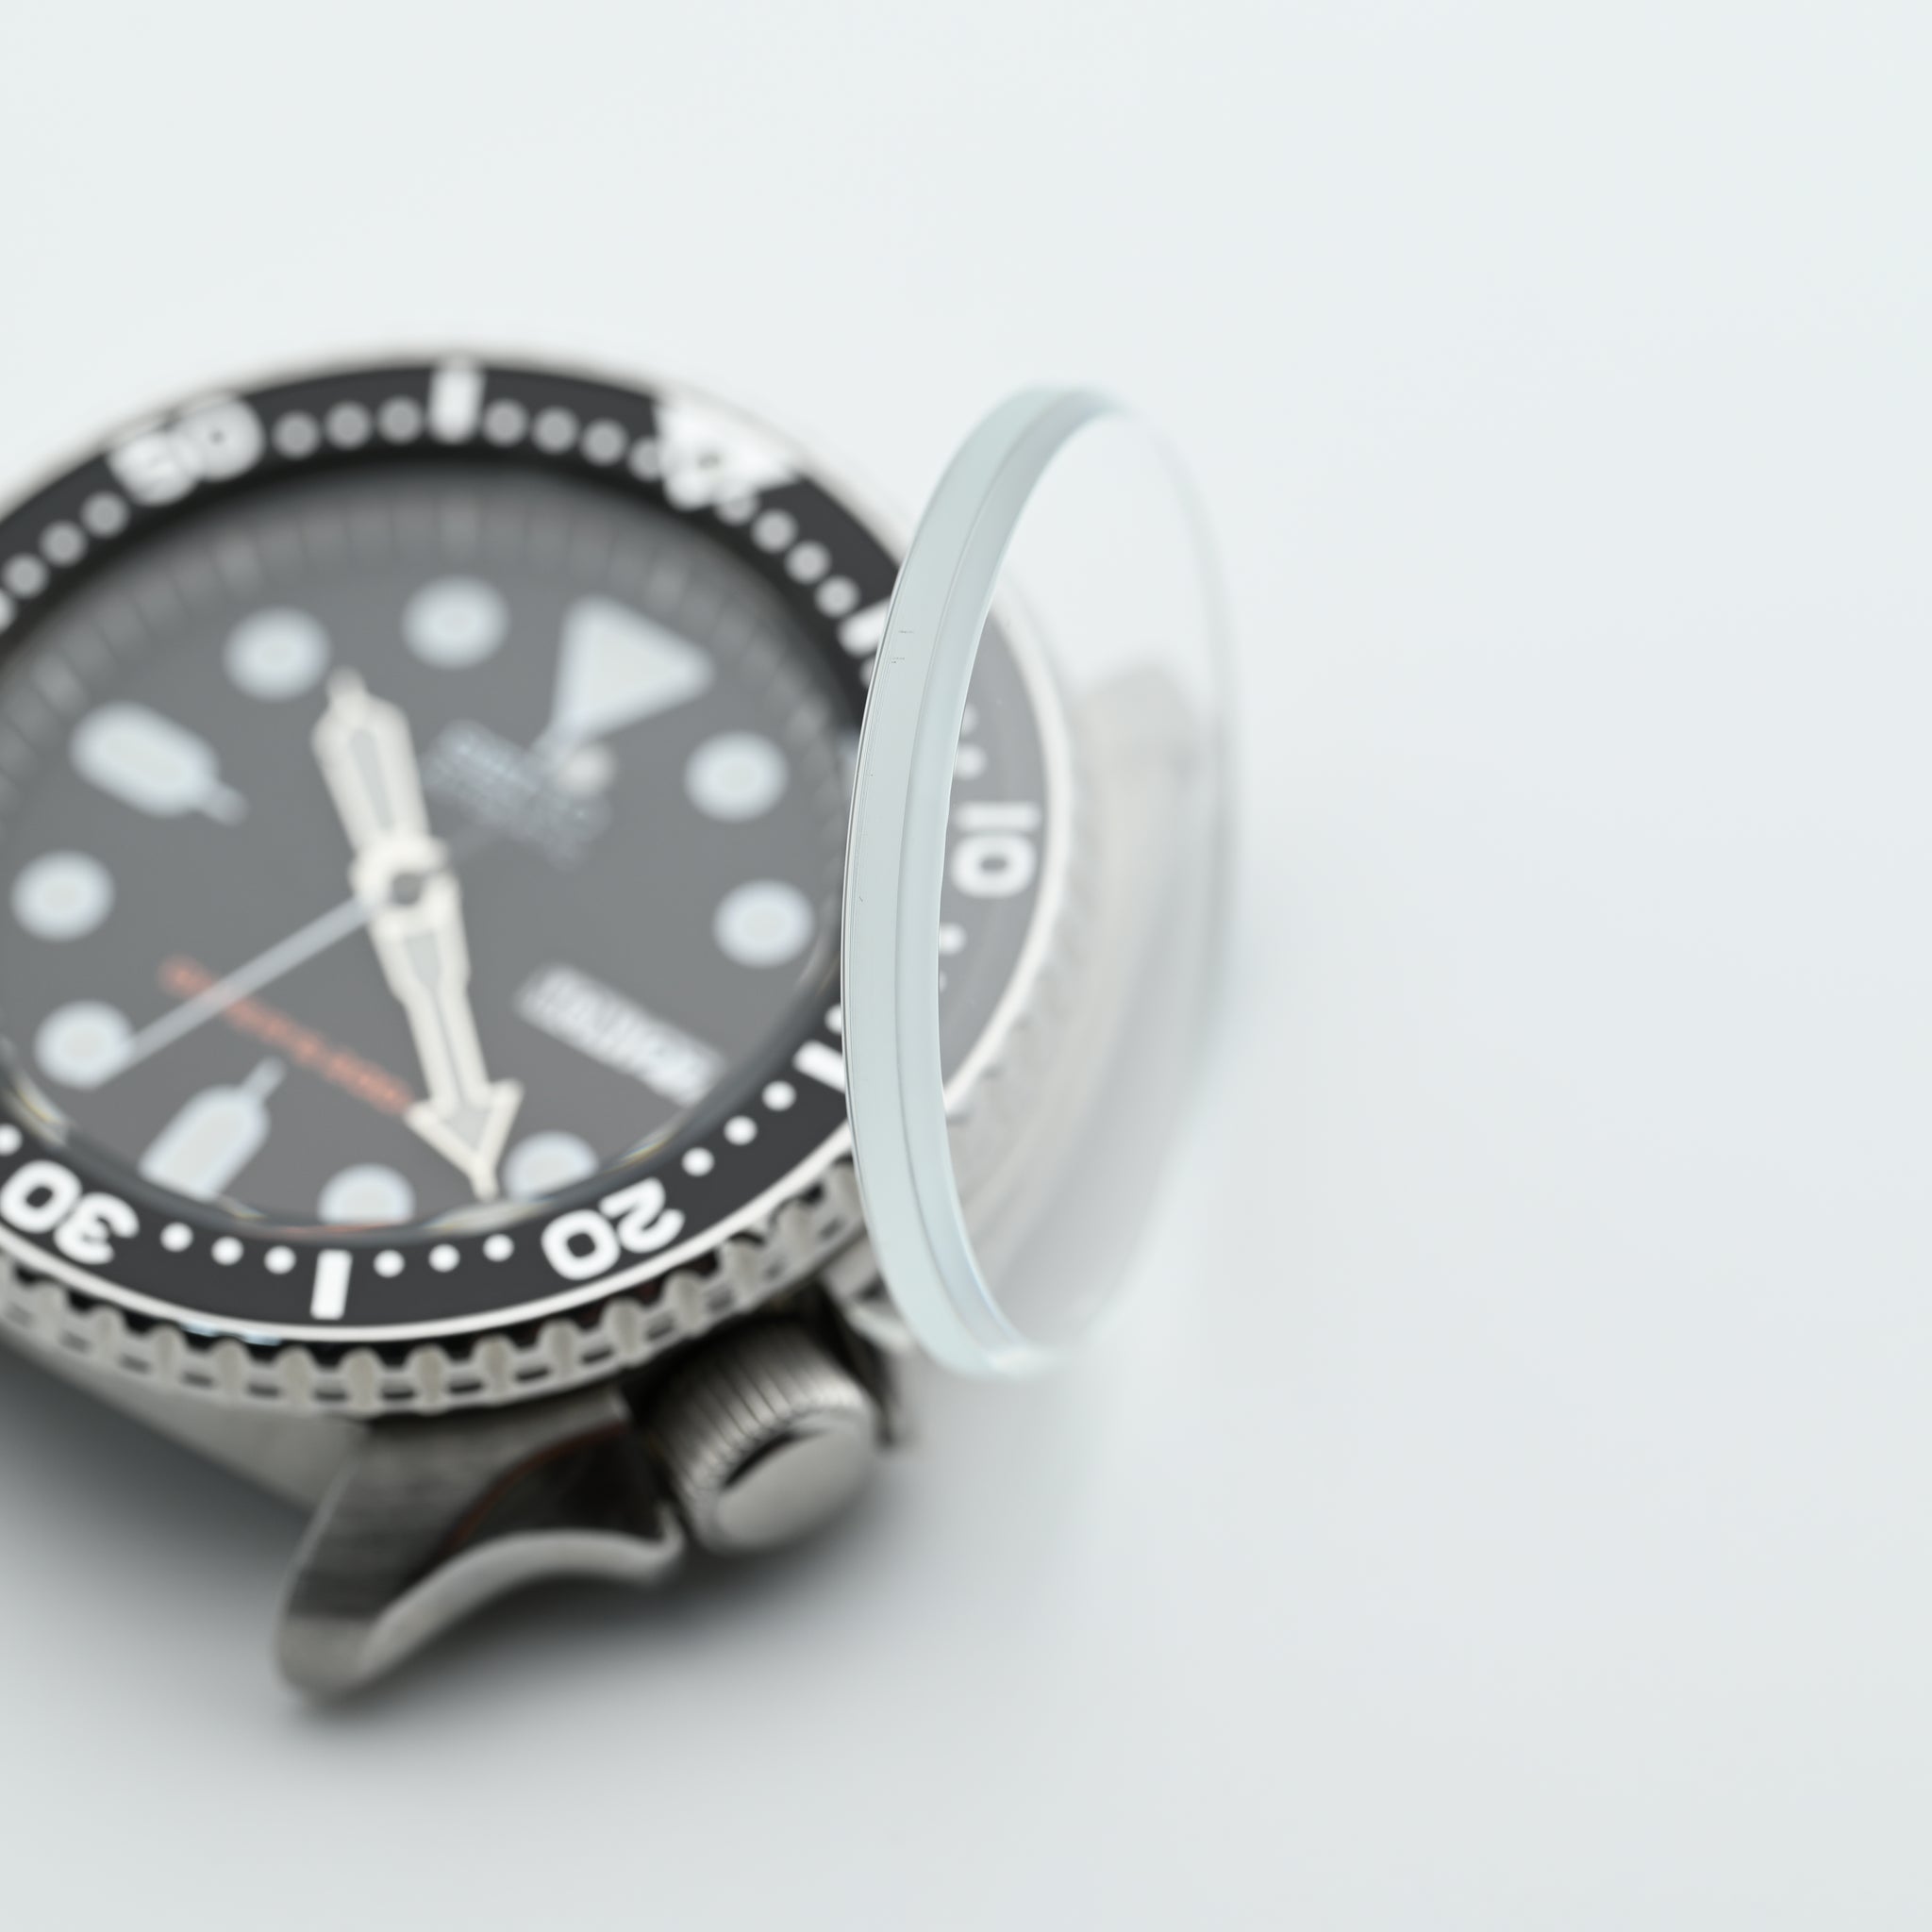 CRS008 OEM Hardlex Crystal for SKX007 / SRPD – Mod Mode Watches